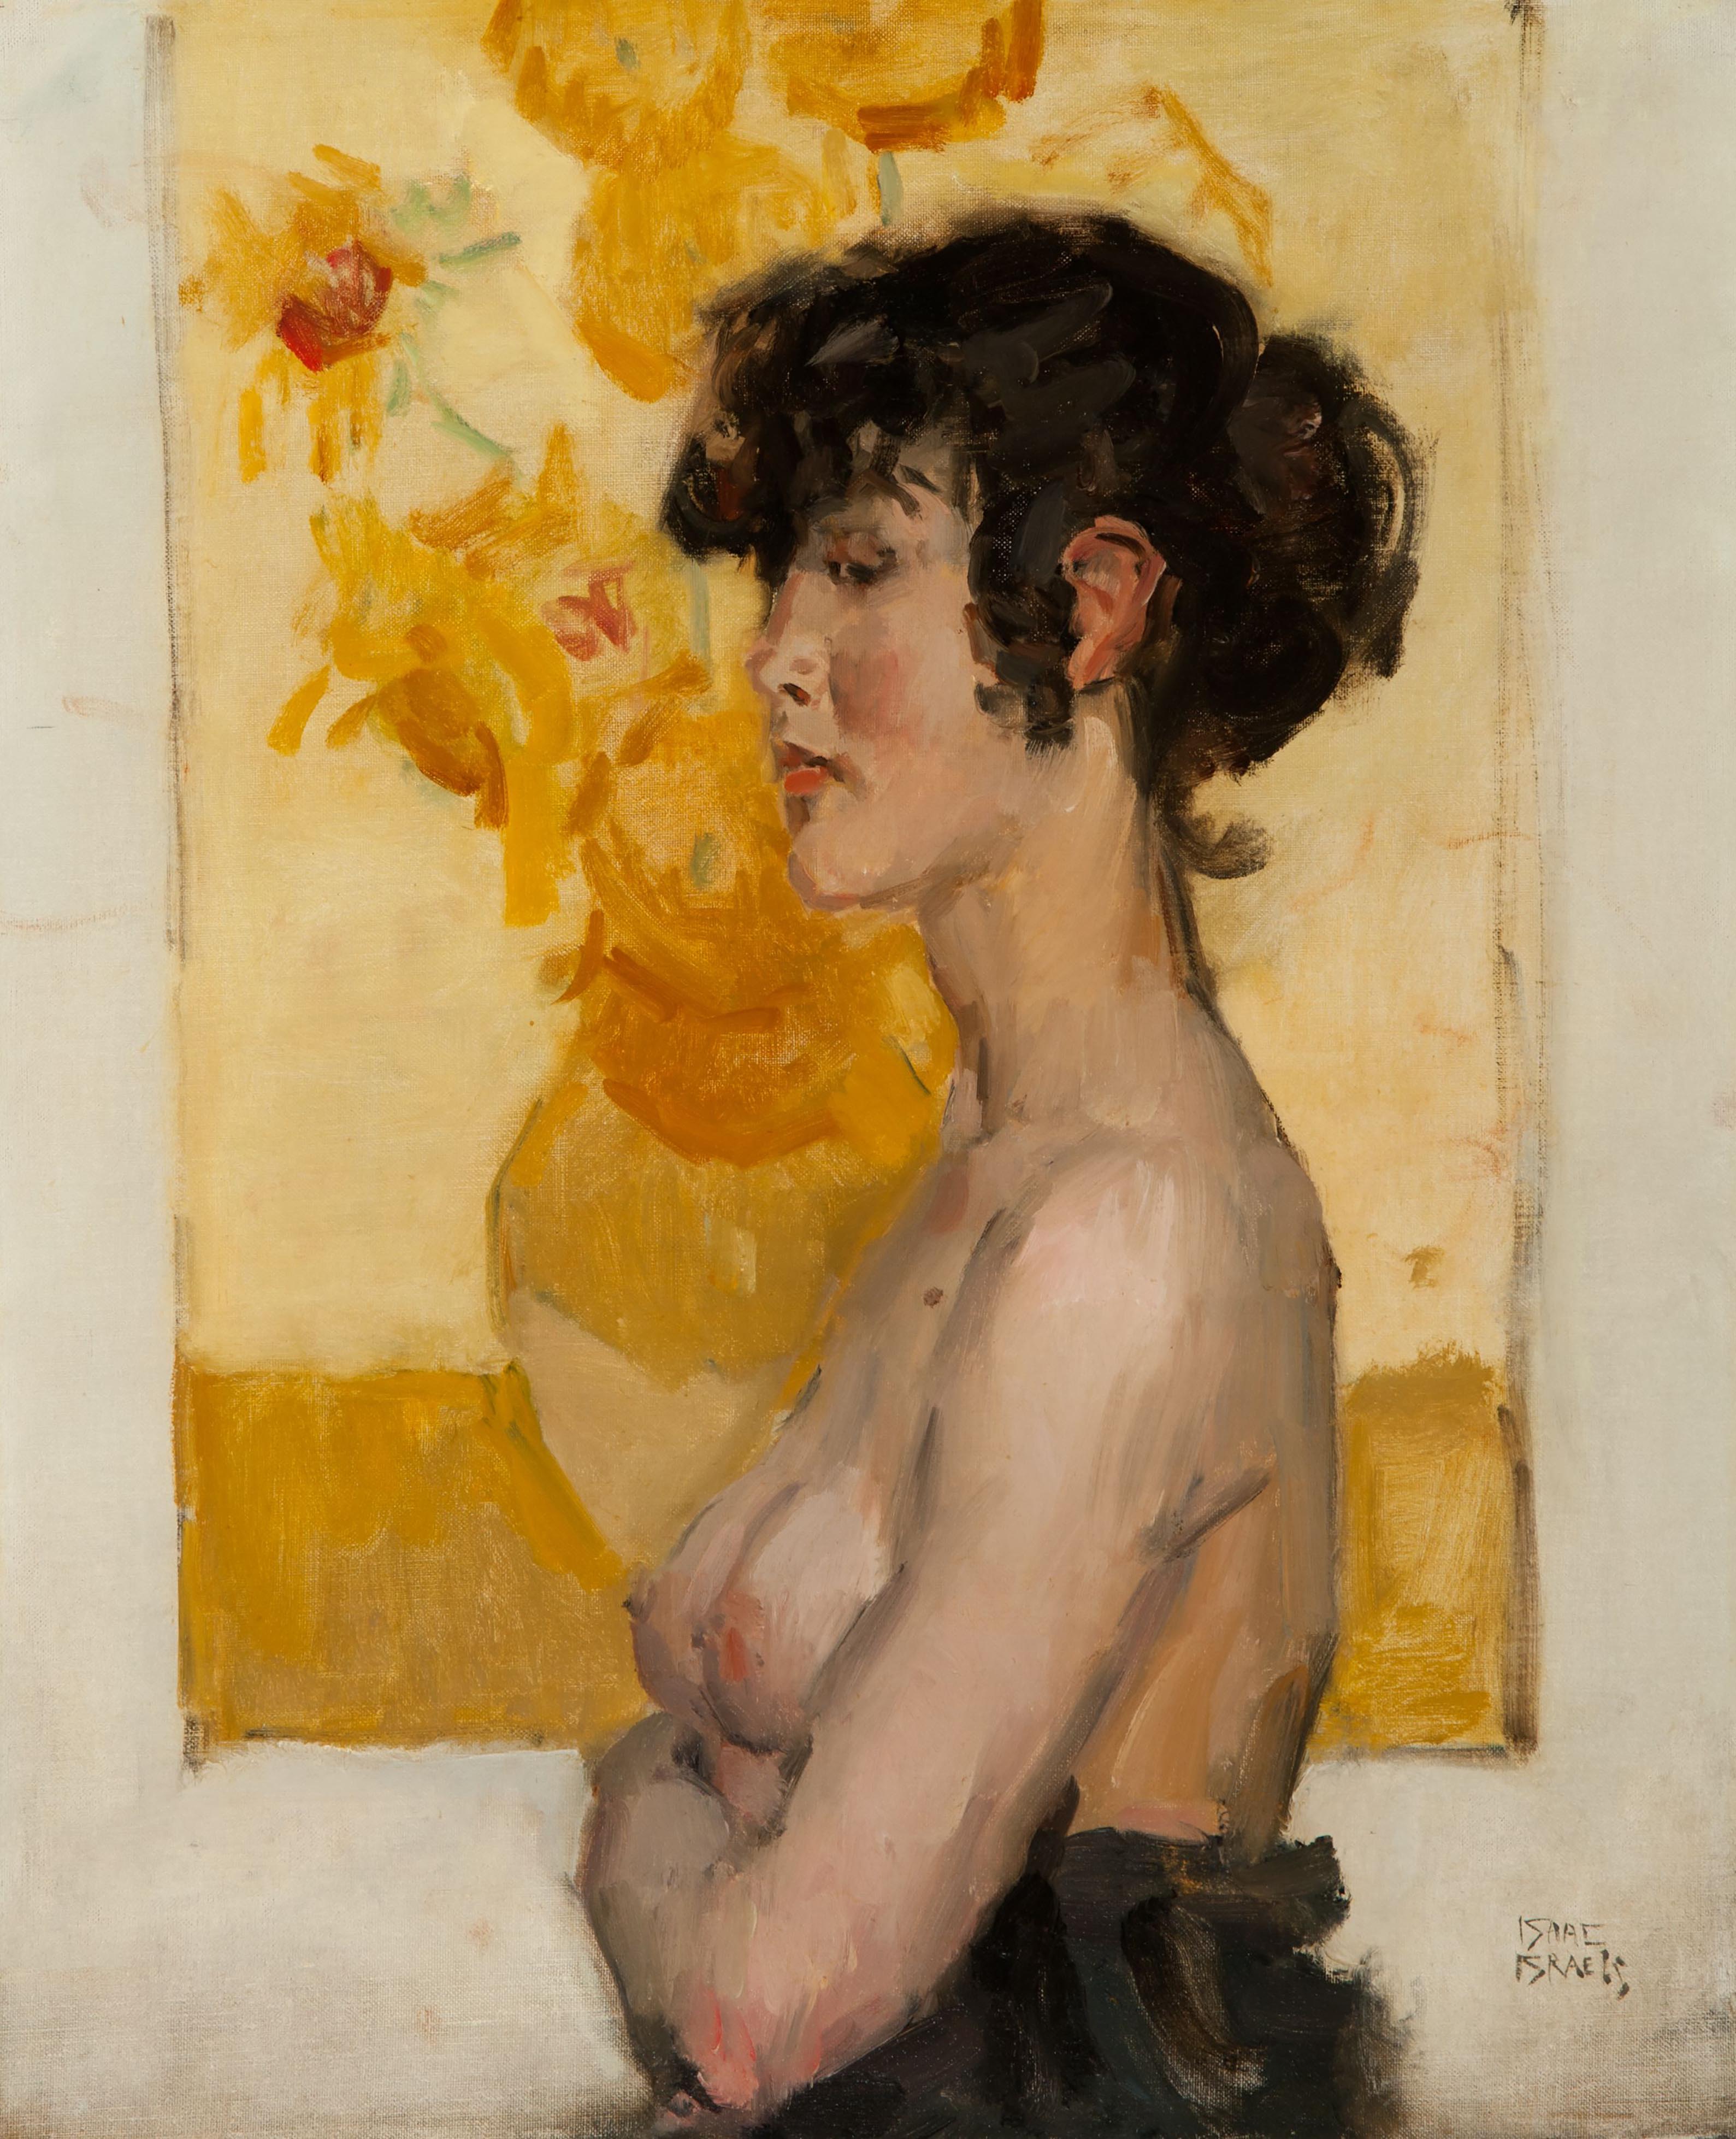 Женщина в профиль перед "Подсолнухами" Ван Гога by Isaac Israels - 1916-1920 - 71 x 59 см 